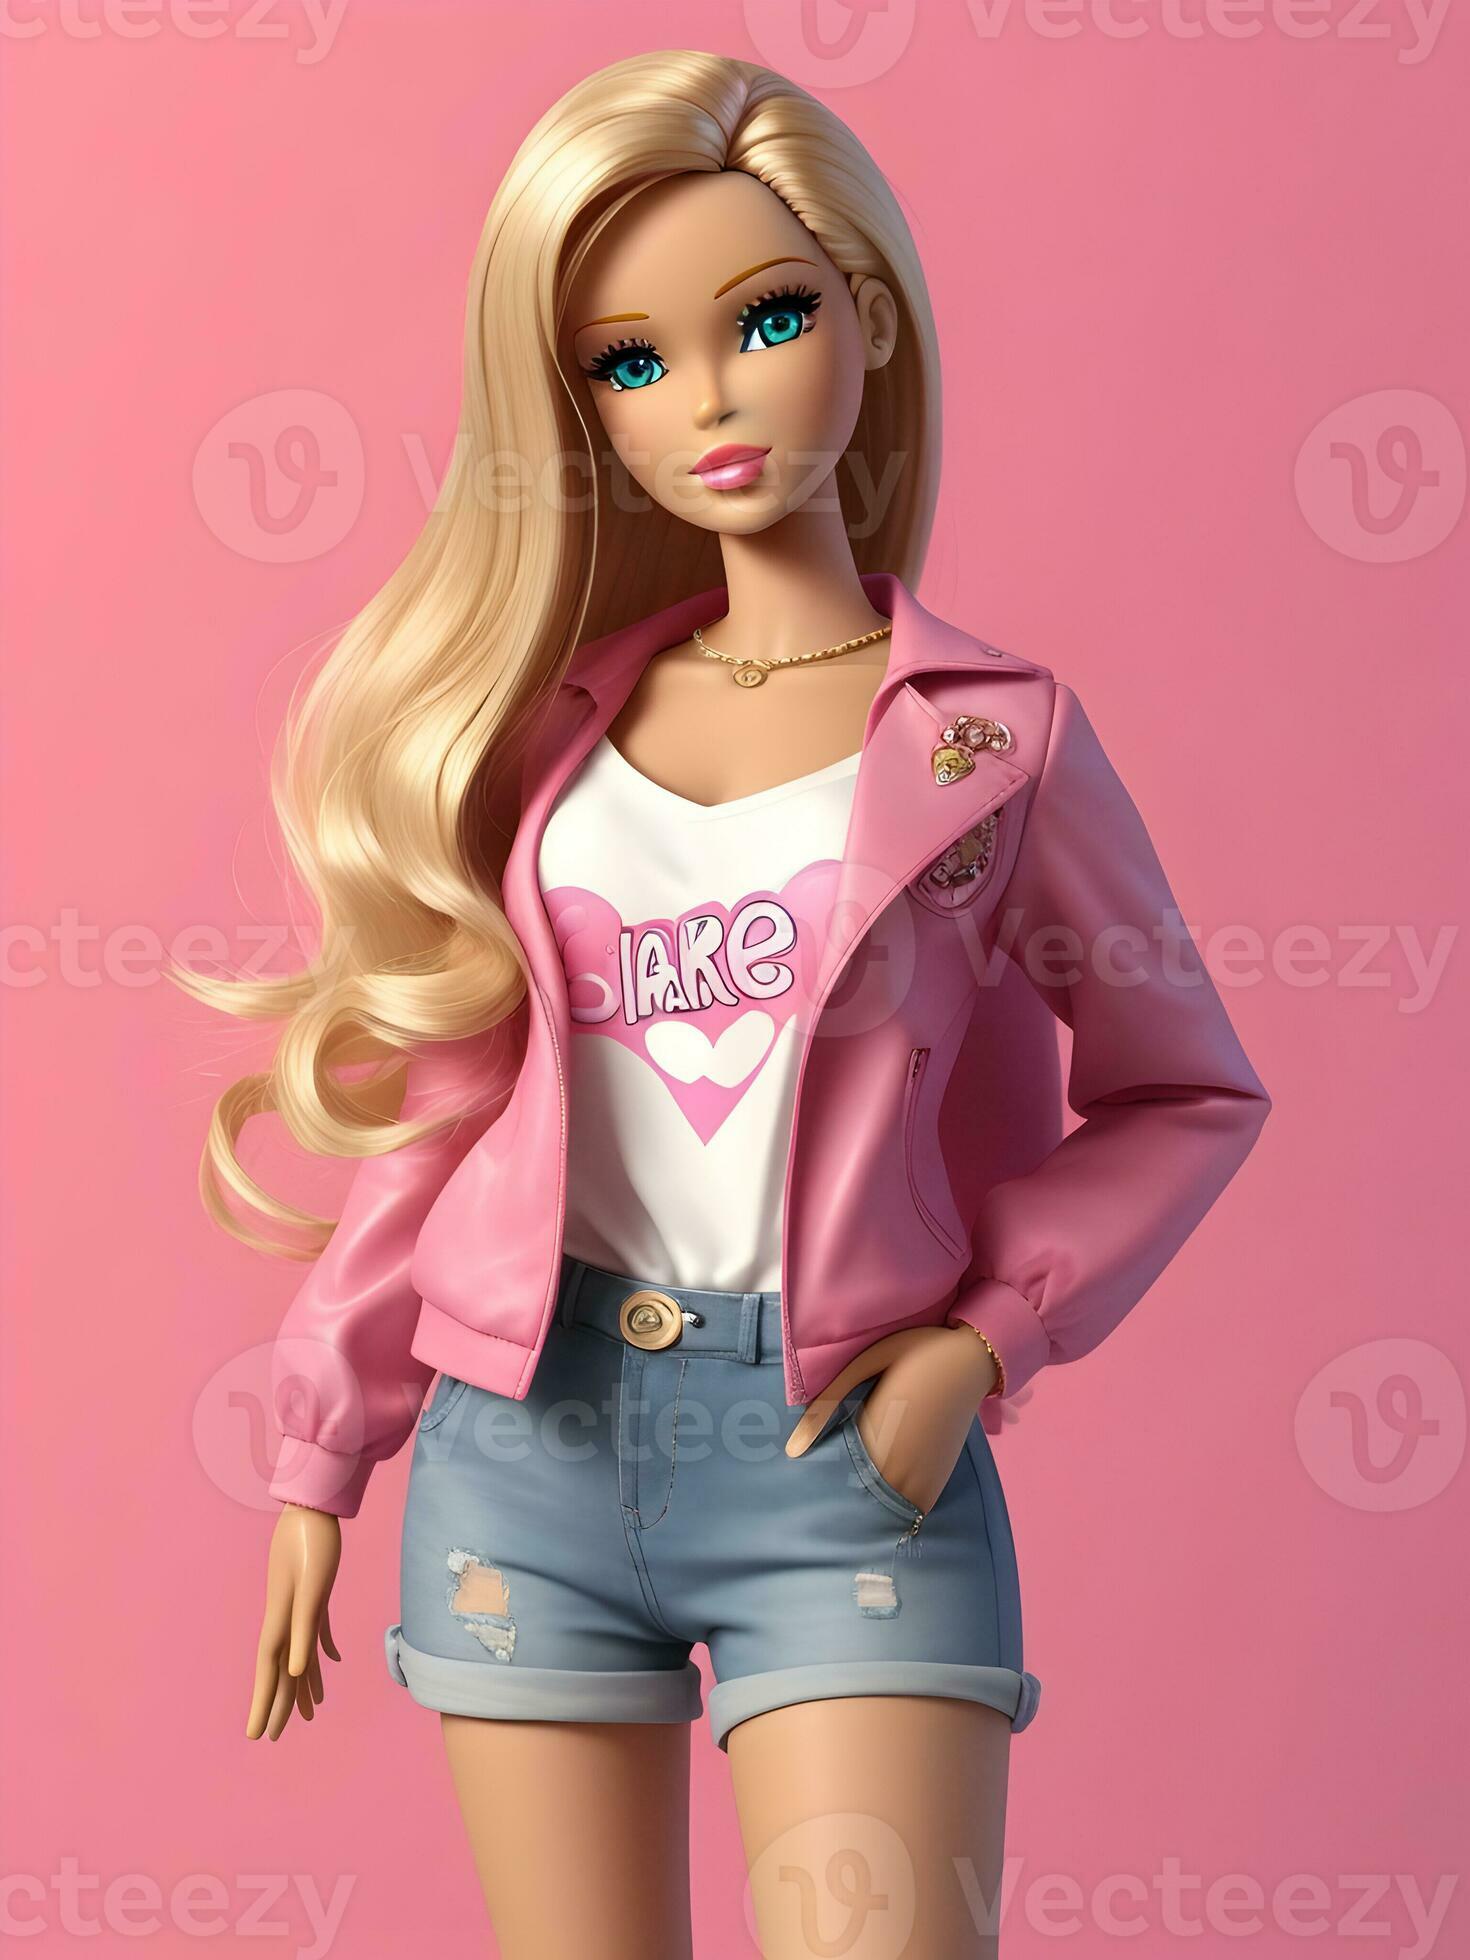 Background Barbie Wallpaper